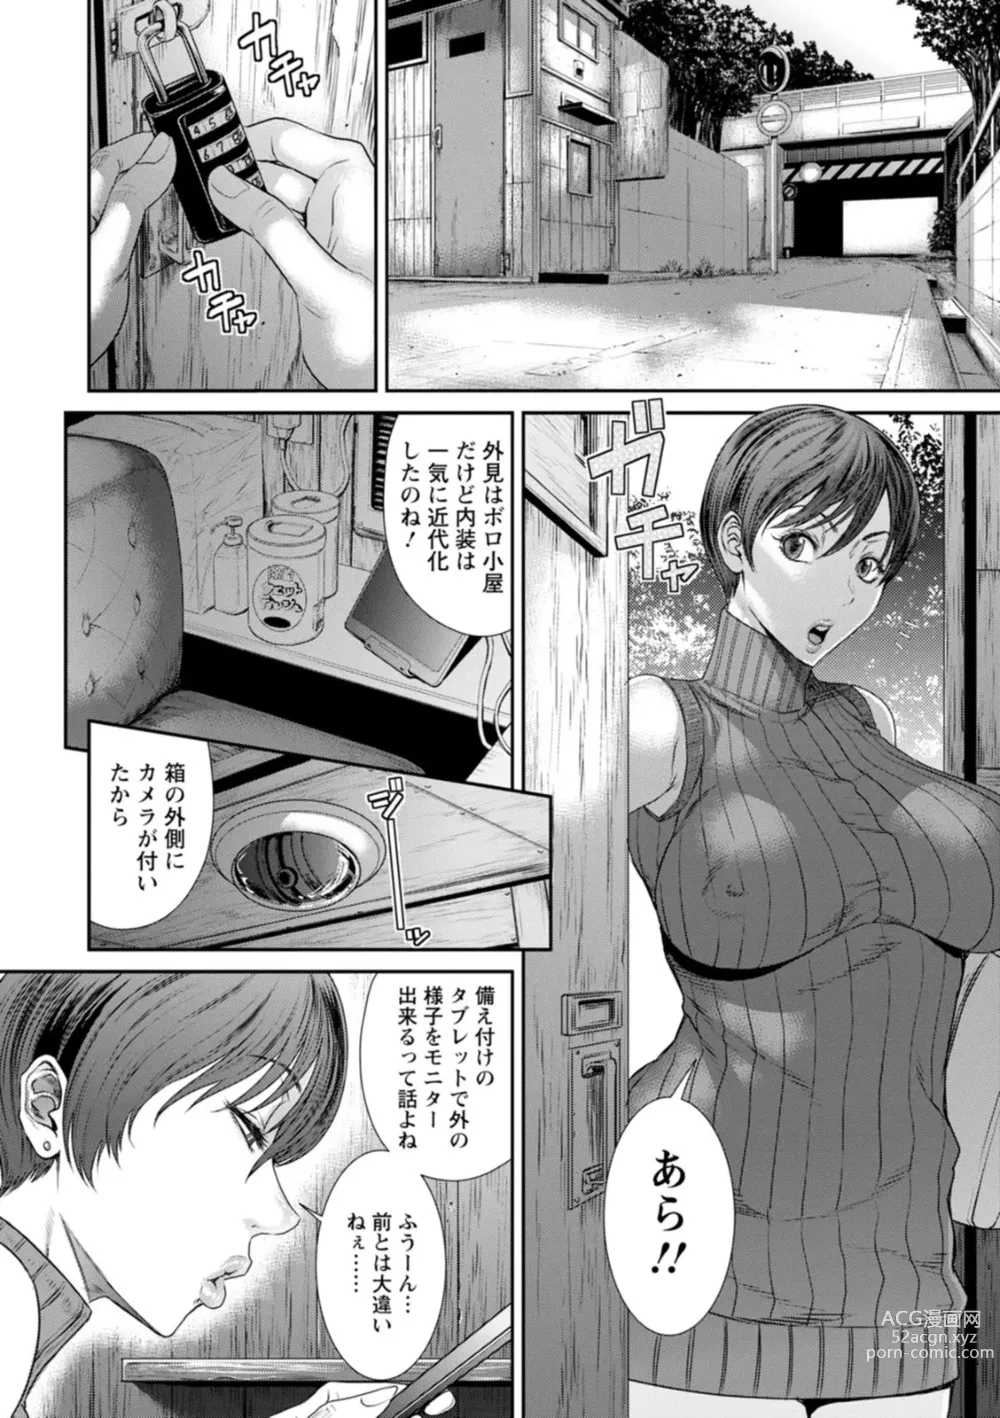 Page 10 of manga Obscene Box